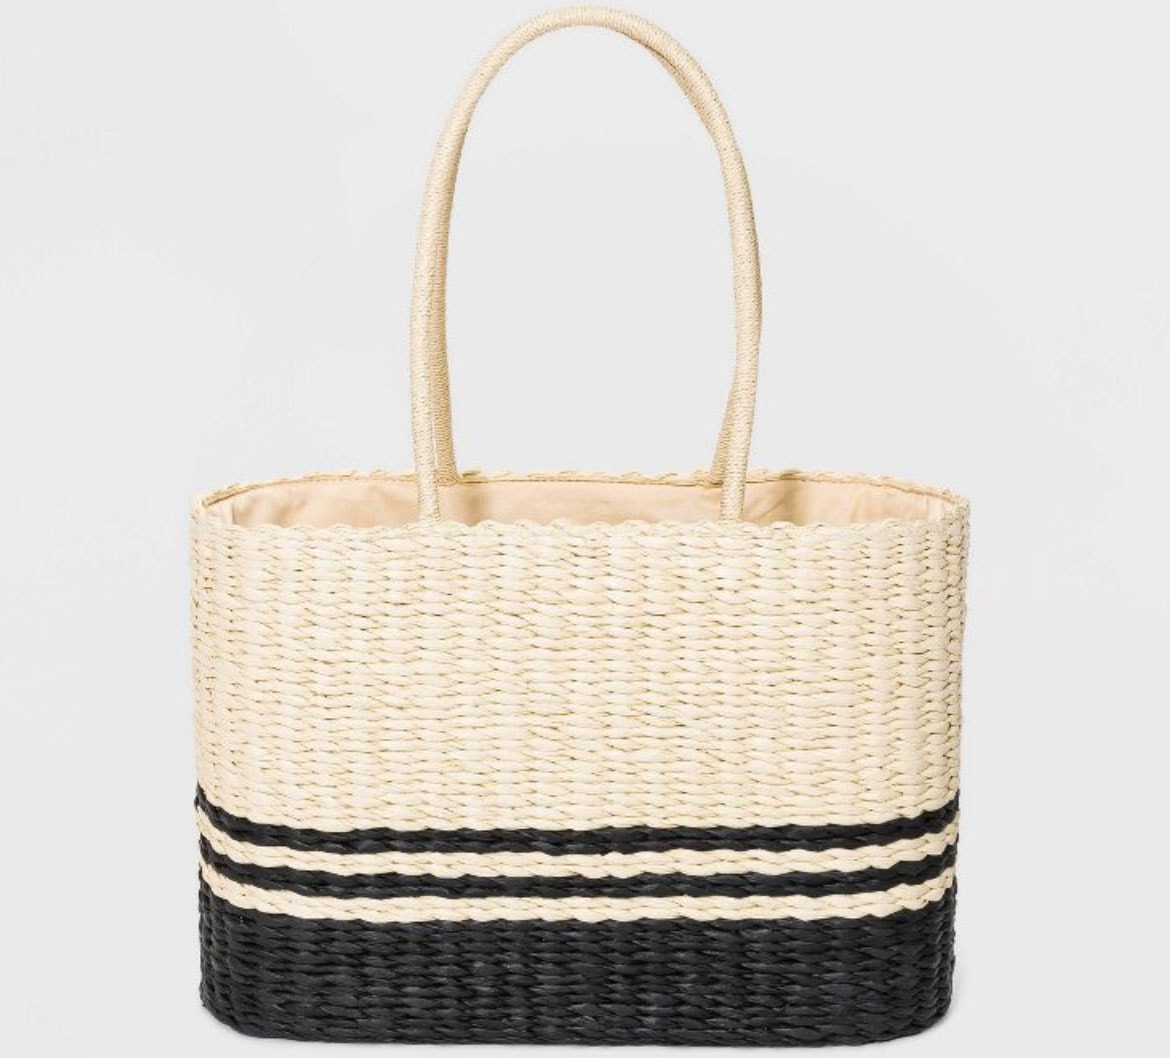 Striped straw tote handbag